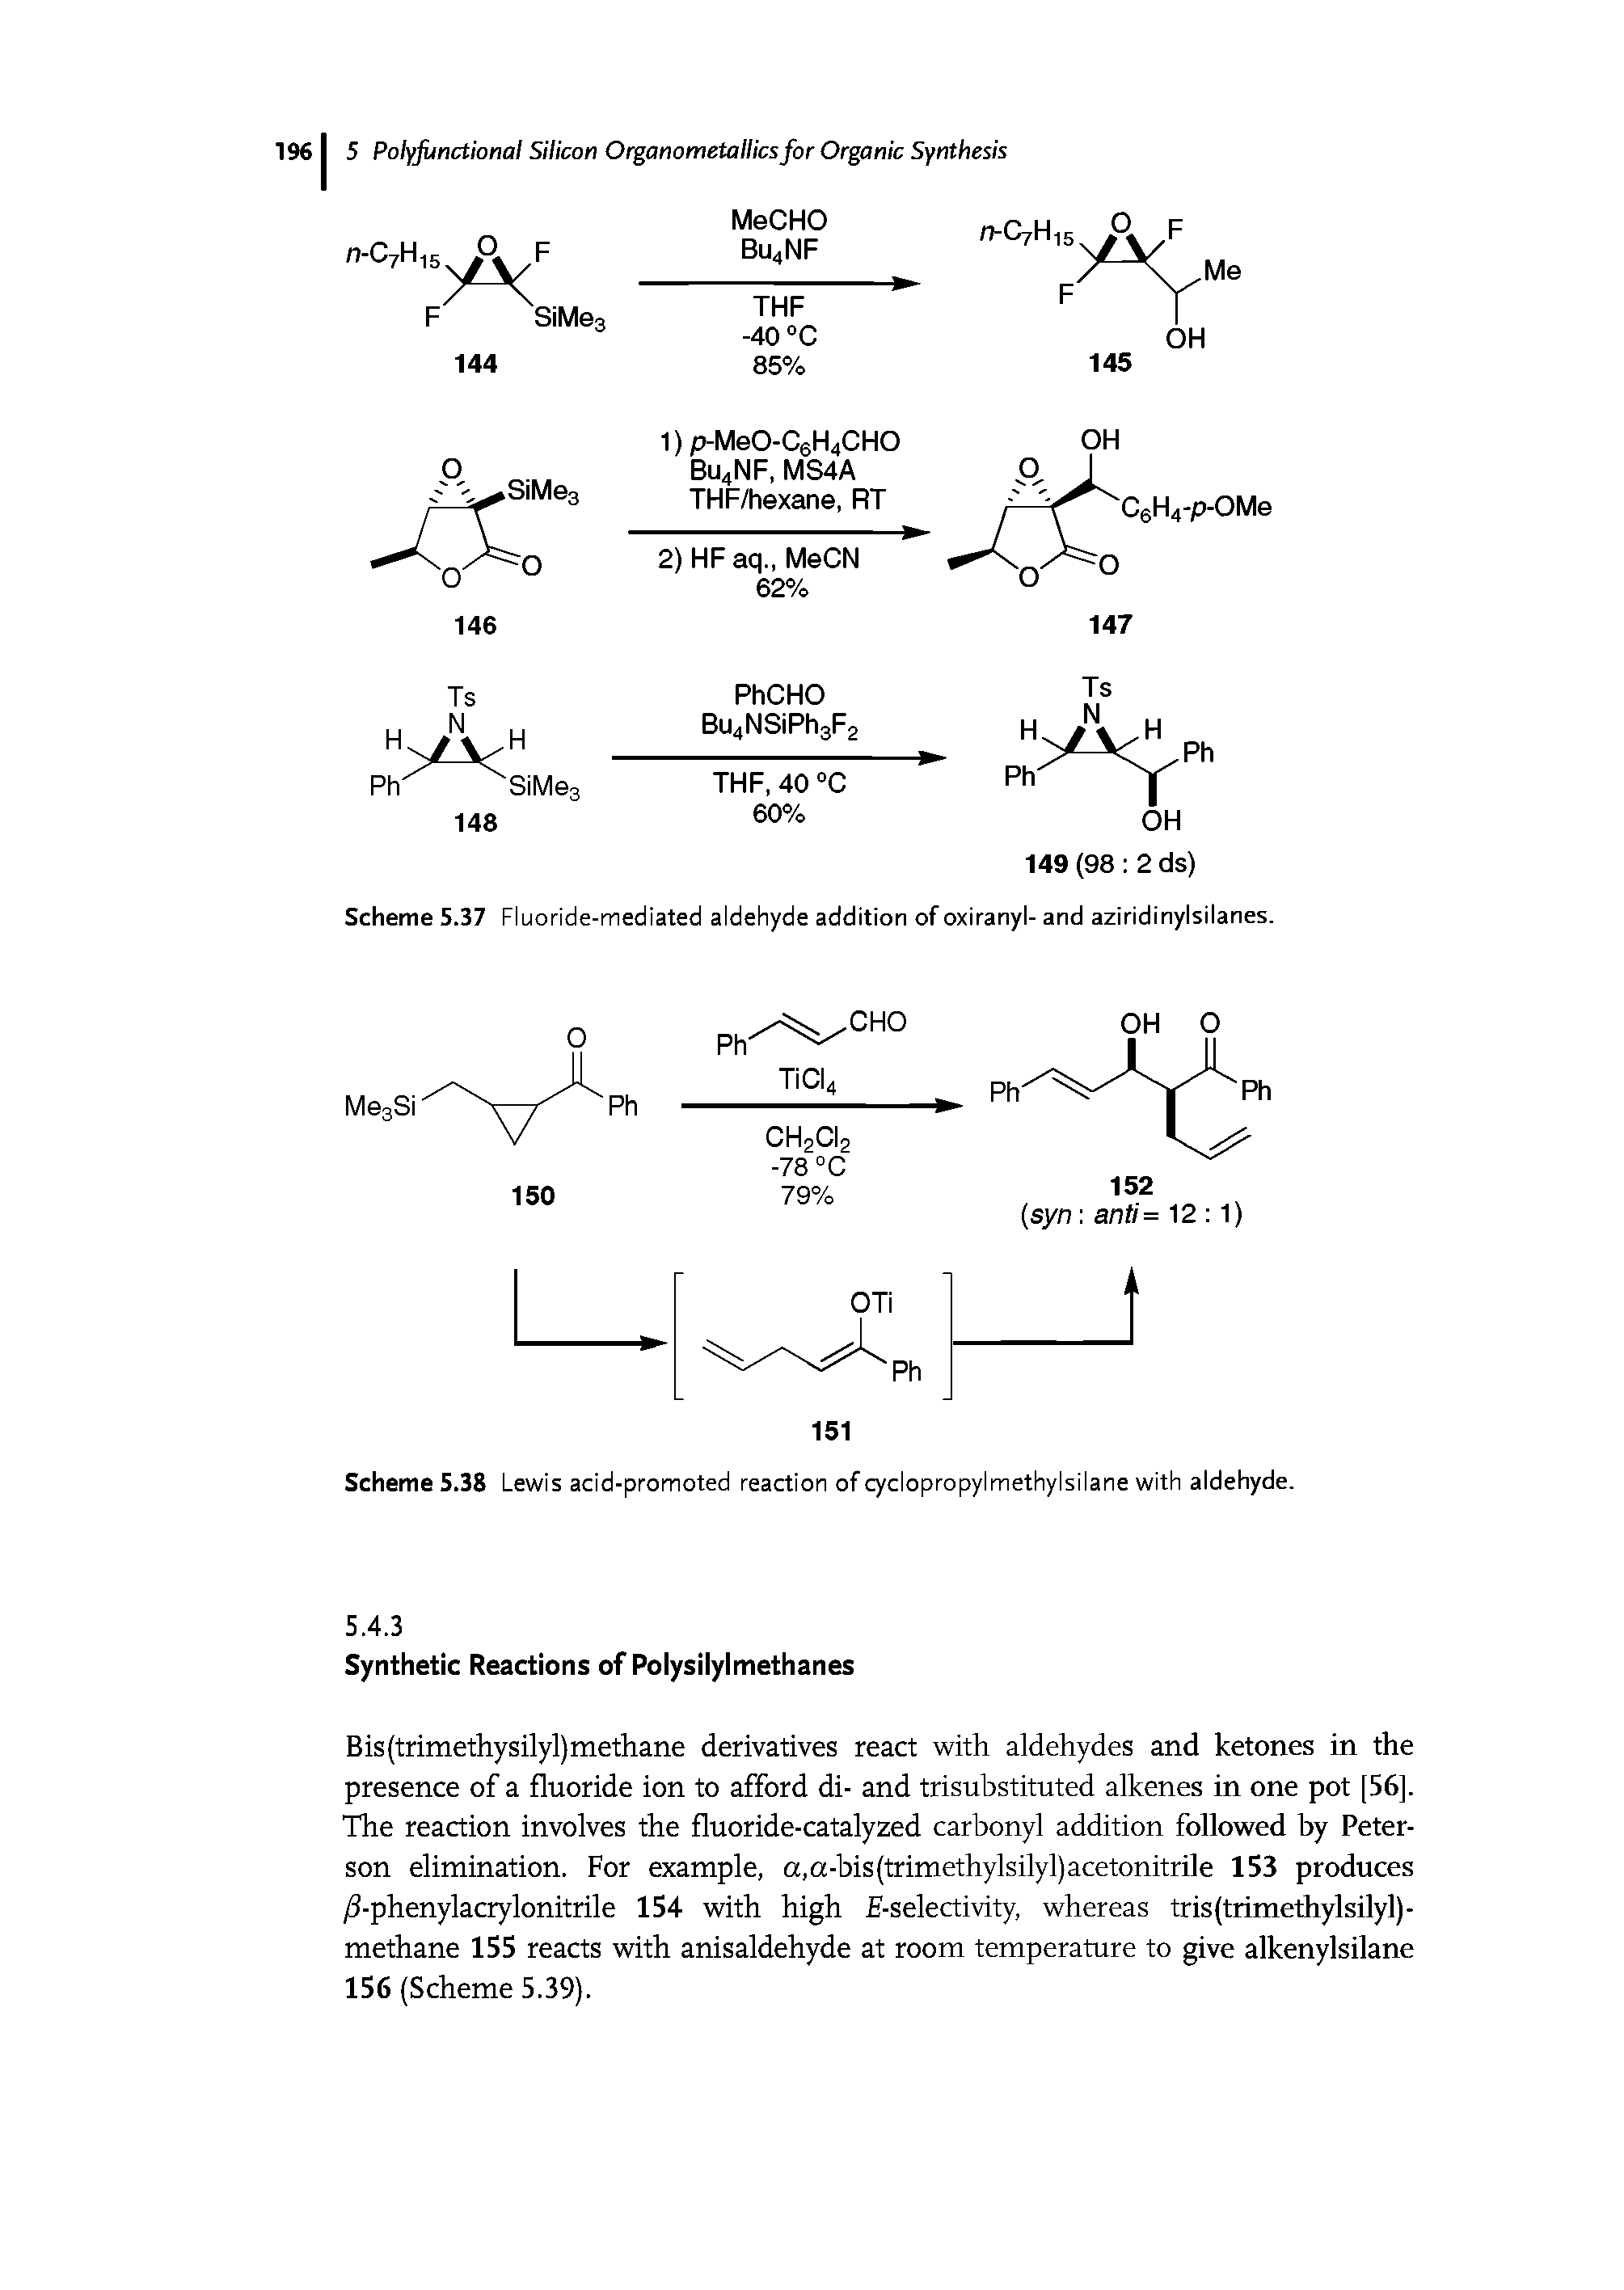 Scheme 5.37 Fluoride-mediated aldehyde addition of oxiranyl- and aziridinylsilanes.